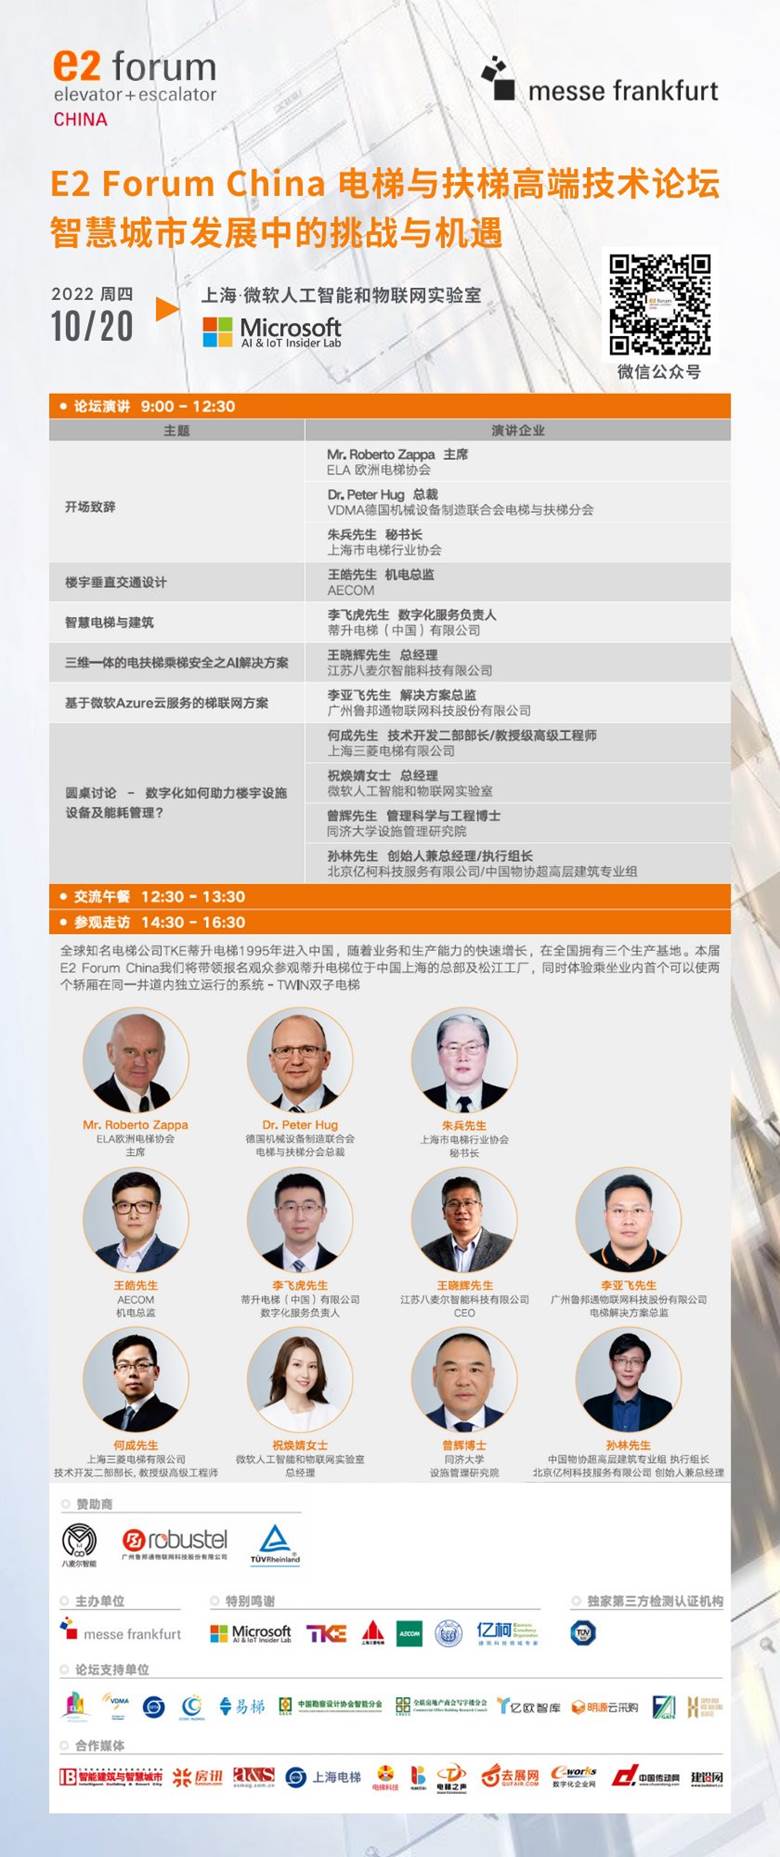 E2 Forum China 电梯与扶梯高端技术论坛 - 议程 副本 (2).png